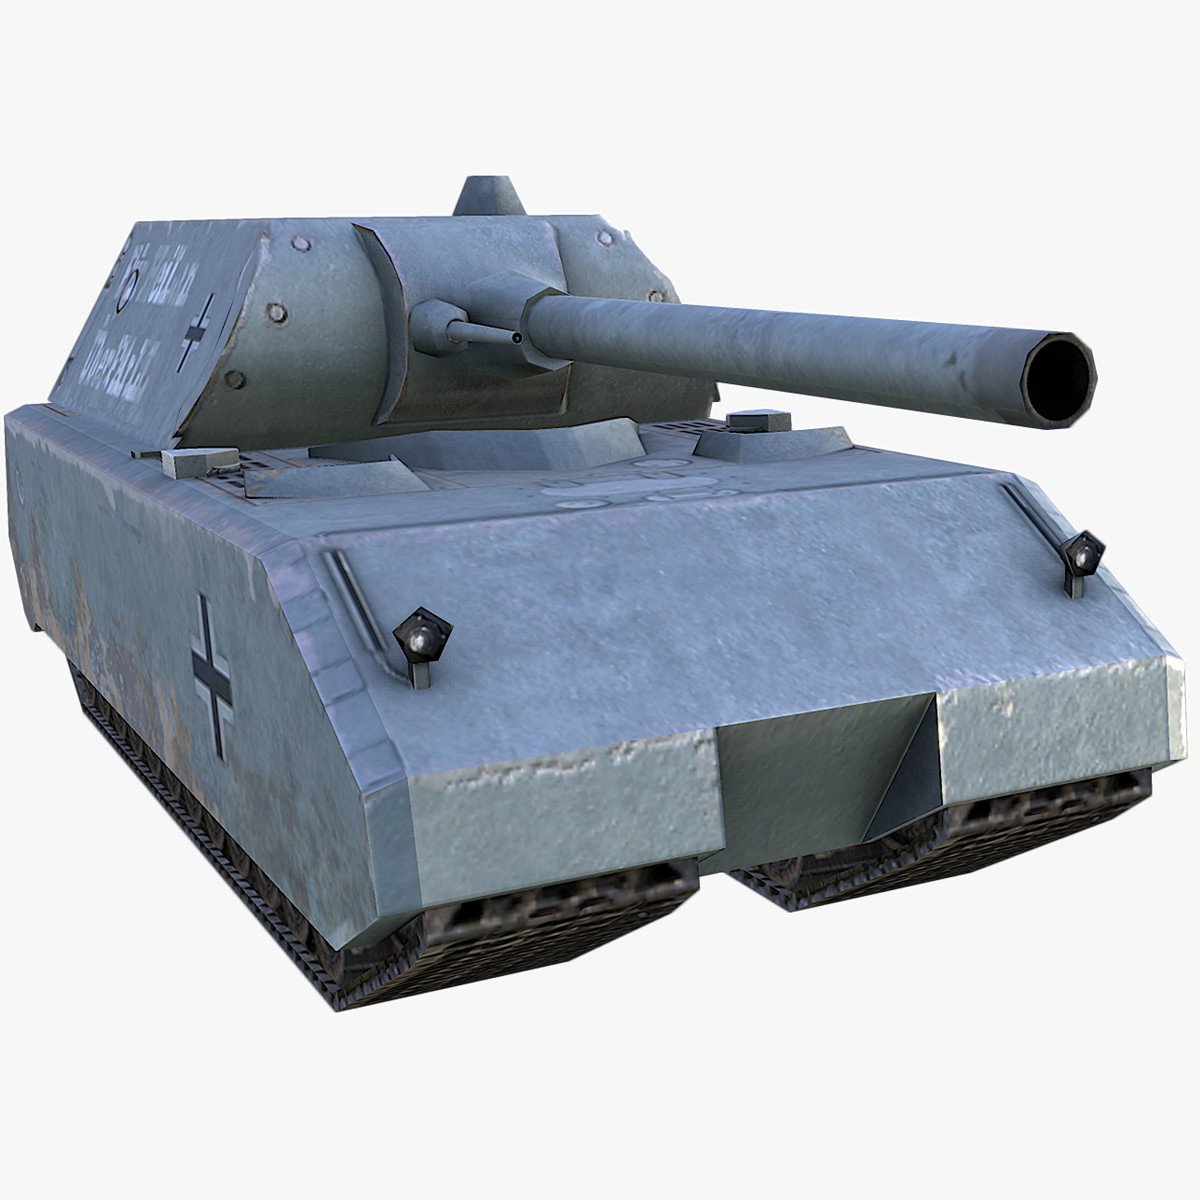 WW2 Maus Tank